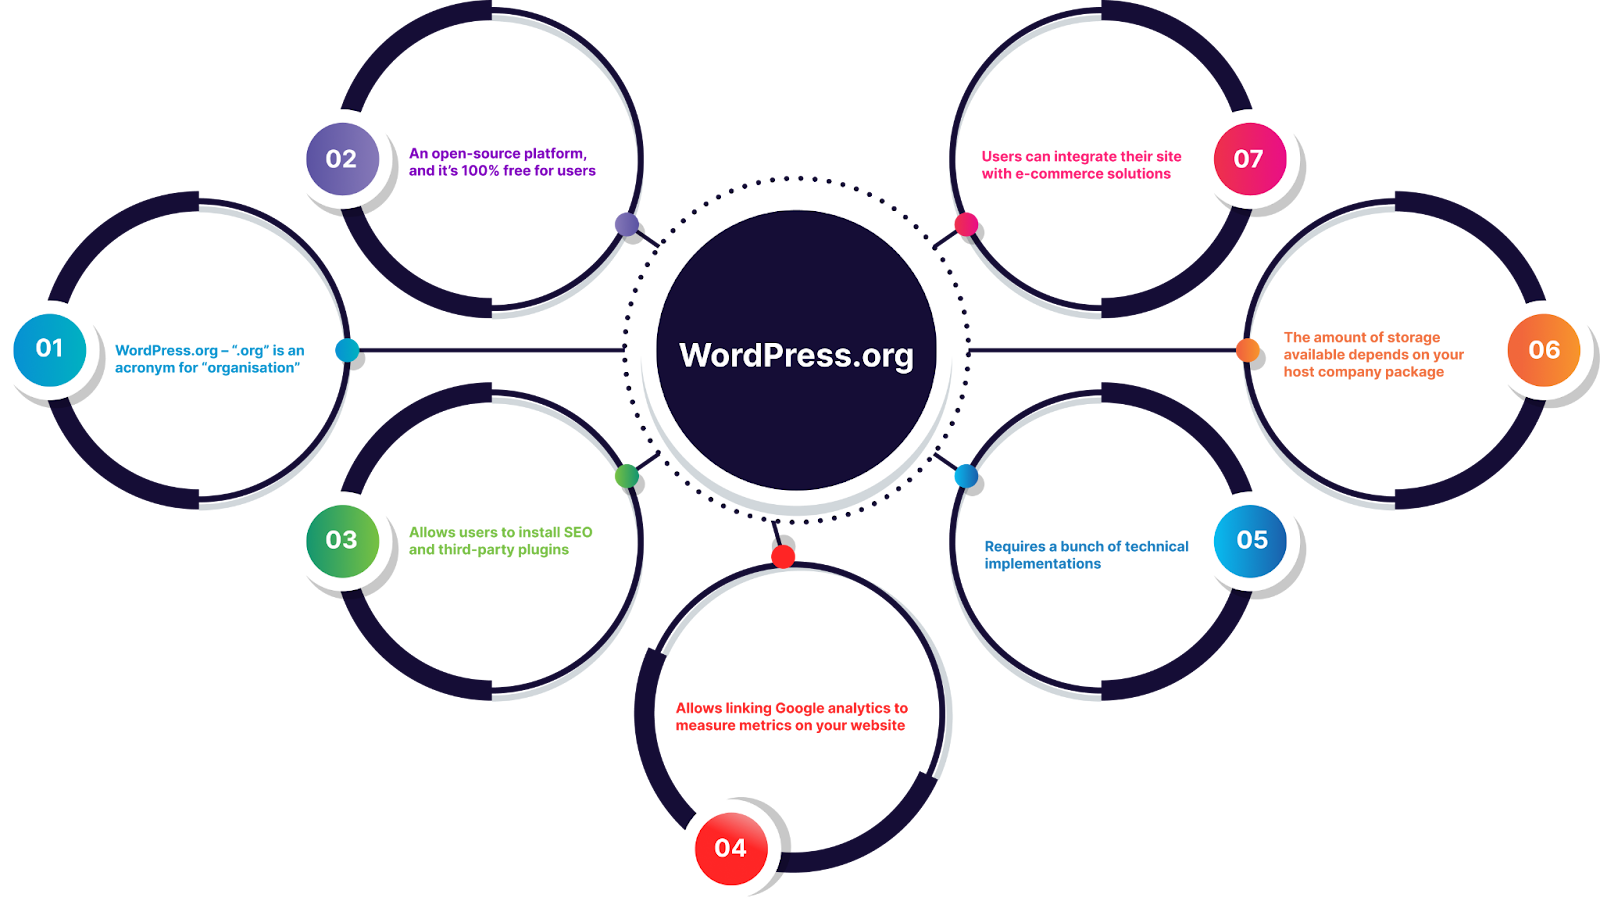 WordPress.org Vs WordPress.com